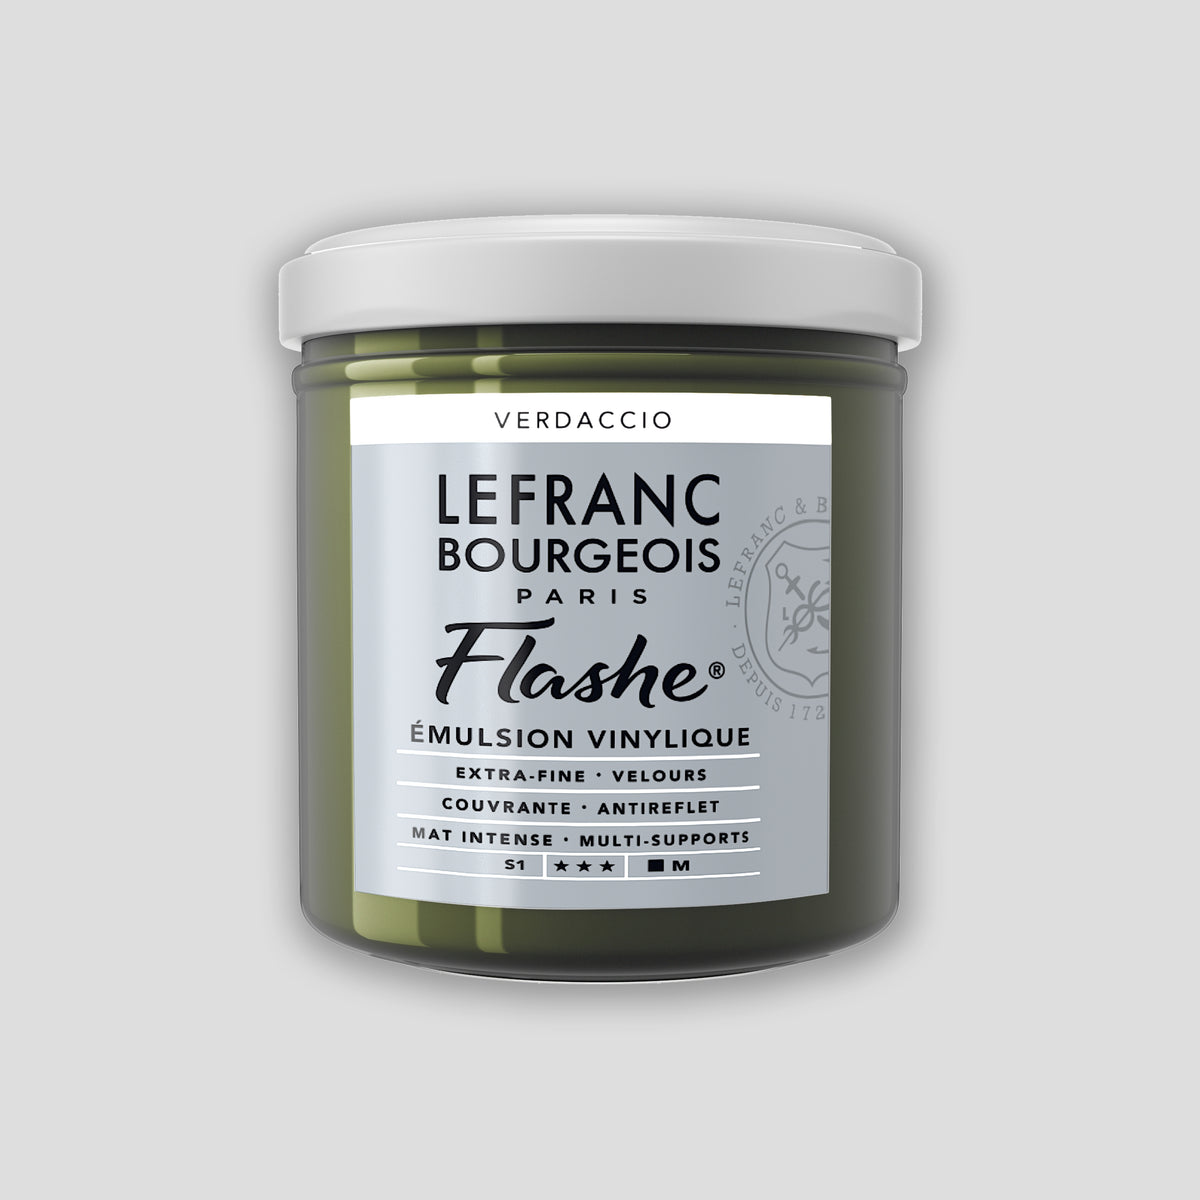 Lefranc Bourgeois Flashe Acrylverf 125ml Verdaccio 1